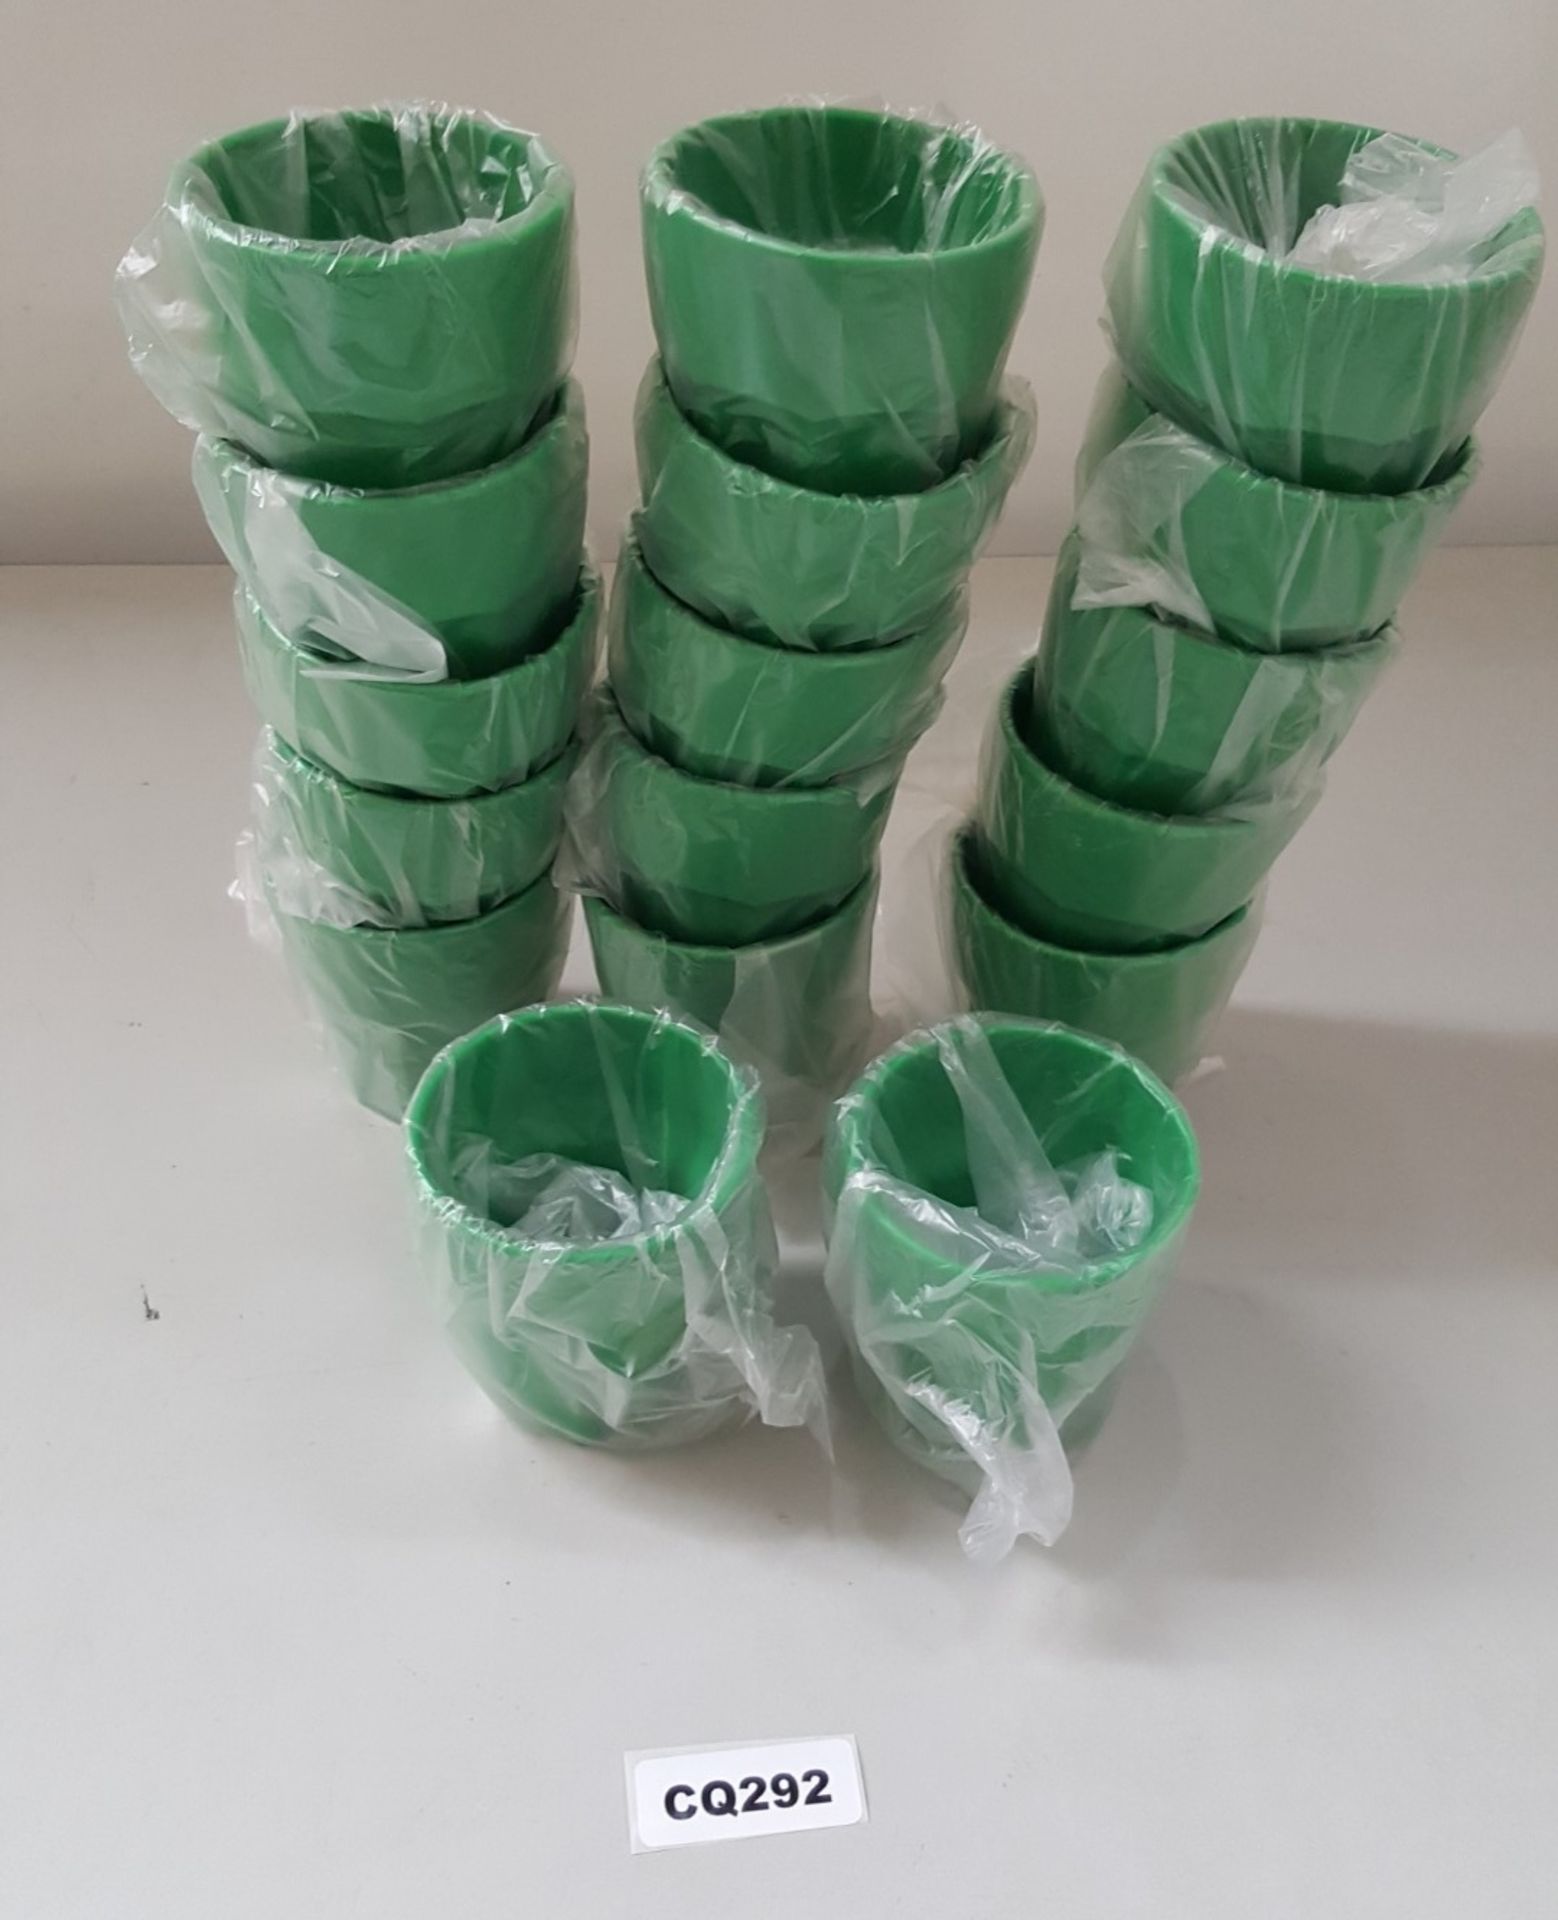 17 x NEW BBP Polycarbonate Rocks Tumbler Cups 256ml Green - Ref CQ292